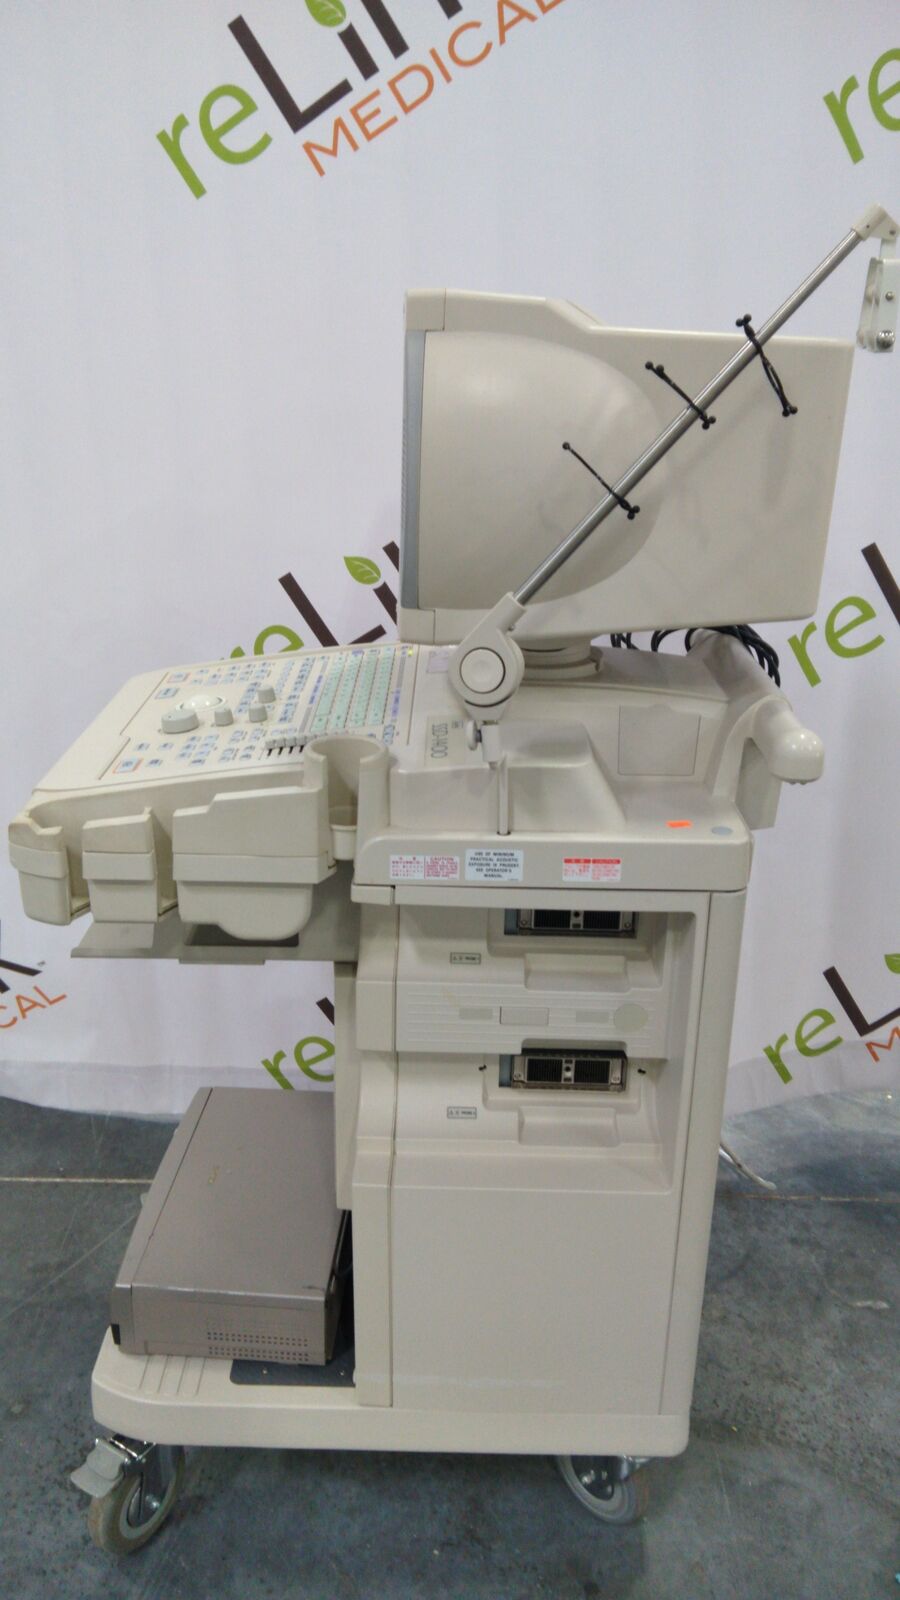 Aloka SSD-1400 Ultrasound DIAGNOSTIC ULTRASOUND MACHINES FOR SALE